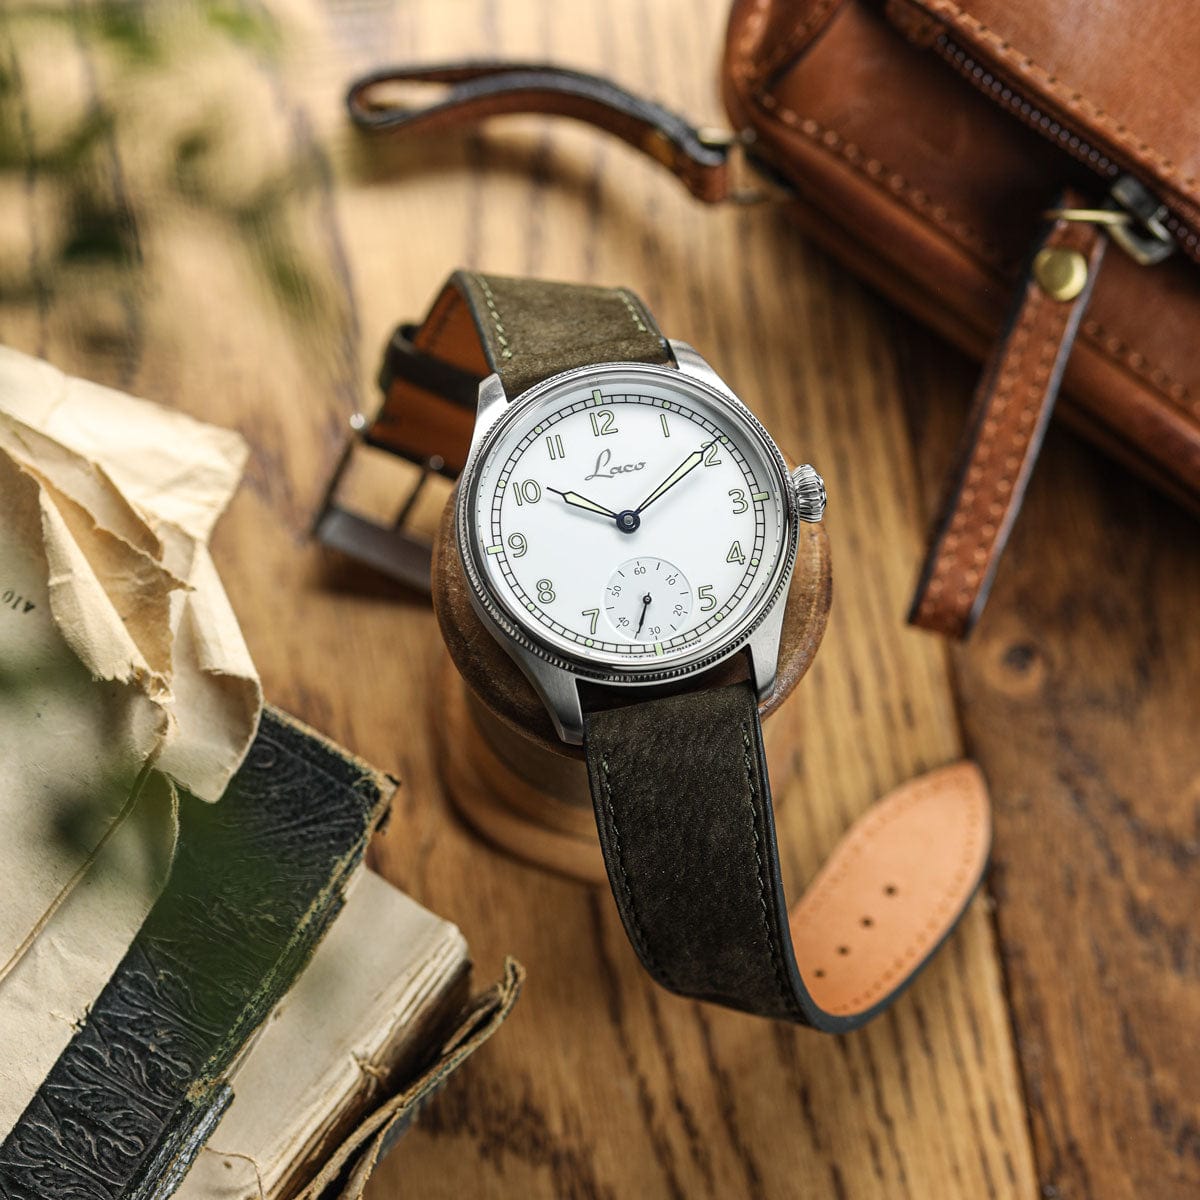 Mozet Flat Nubuck Handmade Leather Watch Strap - Khaki